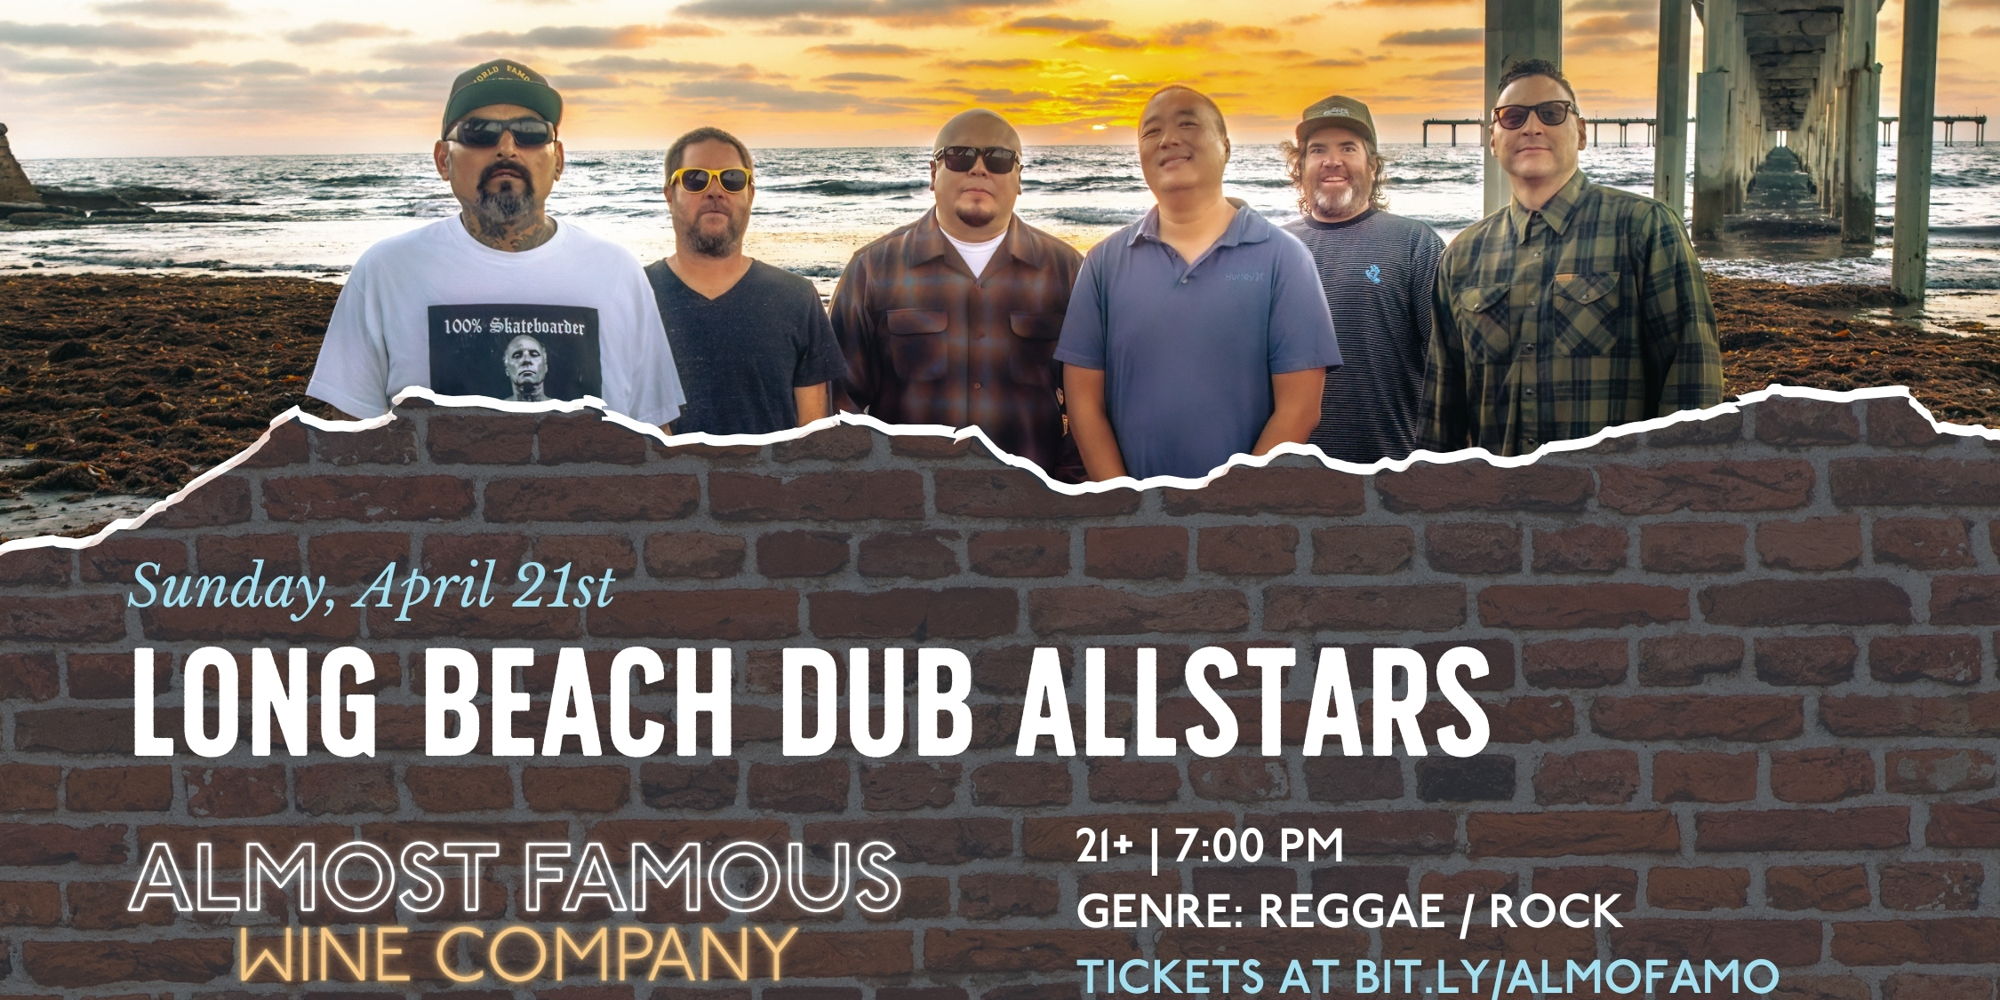 Long Beach Dub Allstars: West Coast Cali Reggae pioneers promotional image